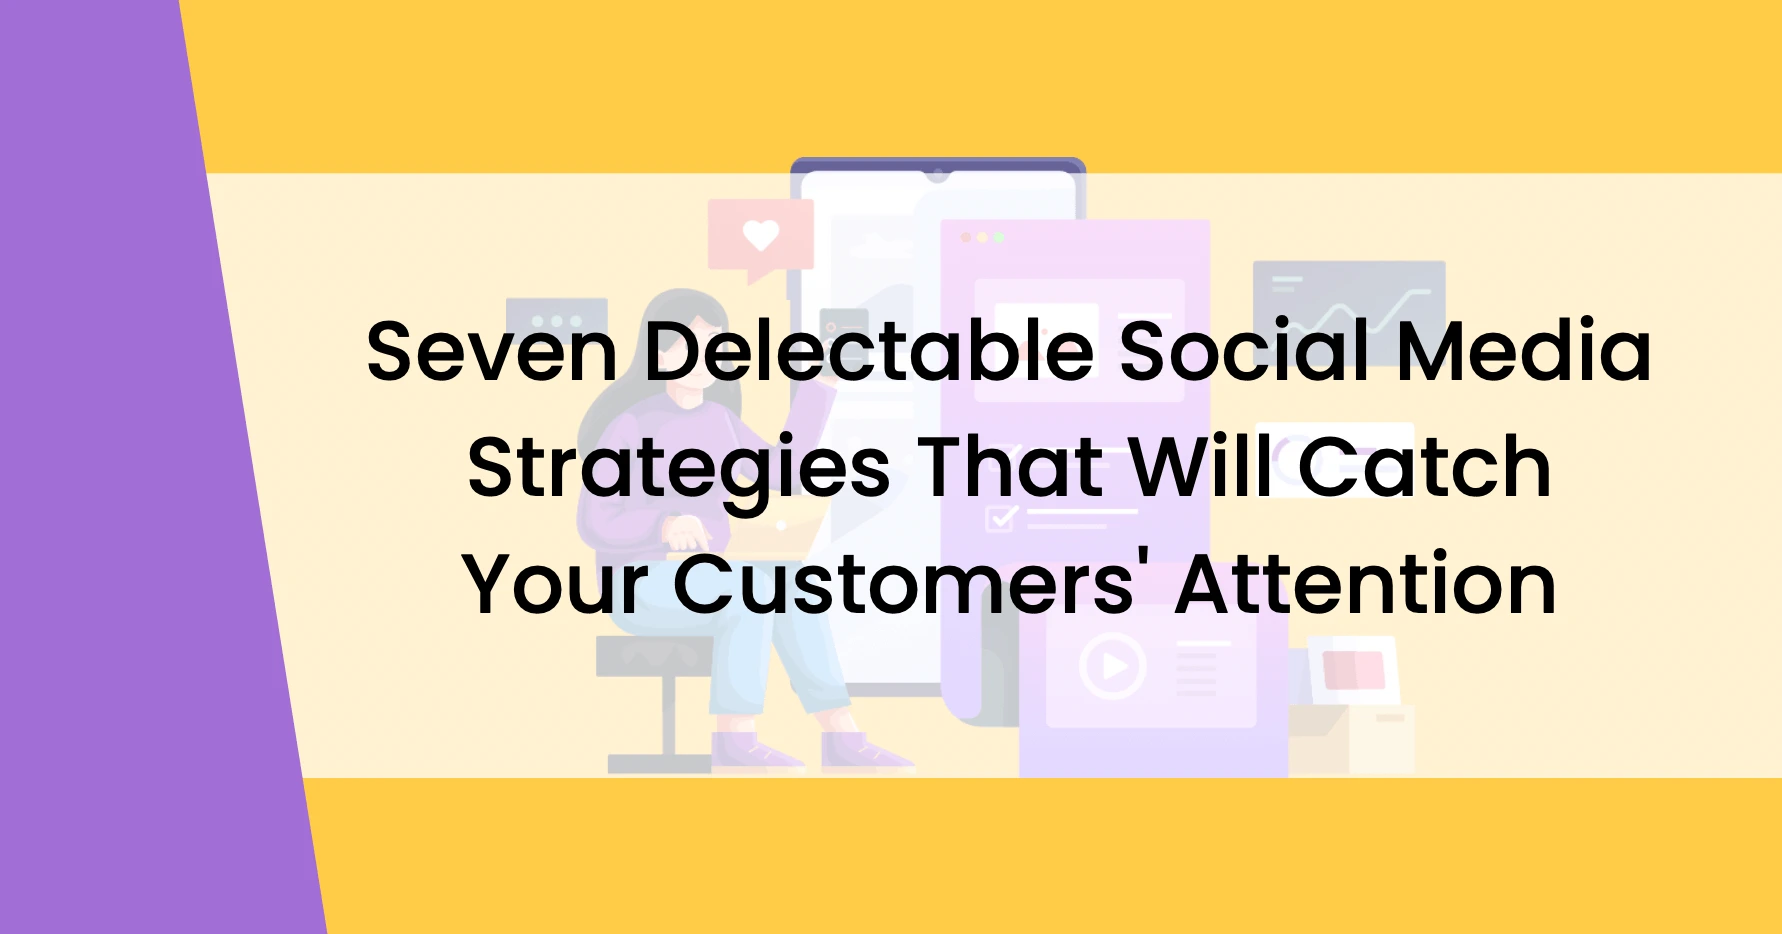 Seven delectable social media strategies